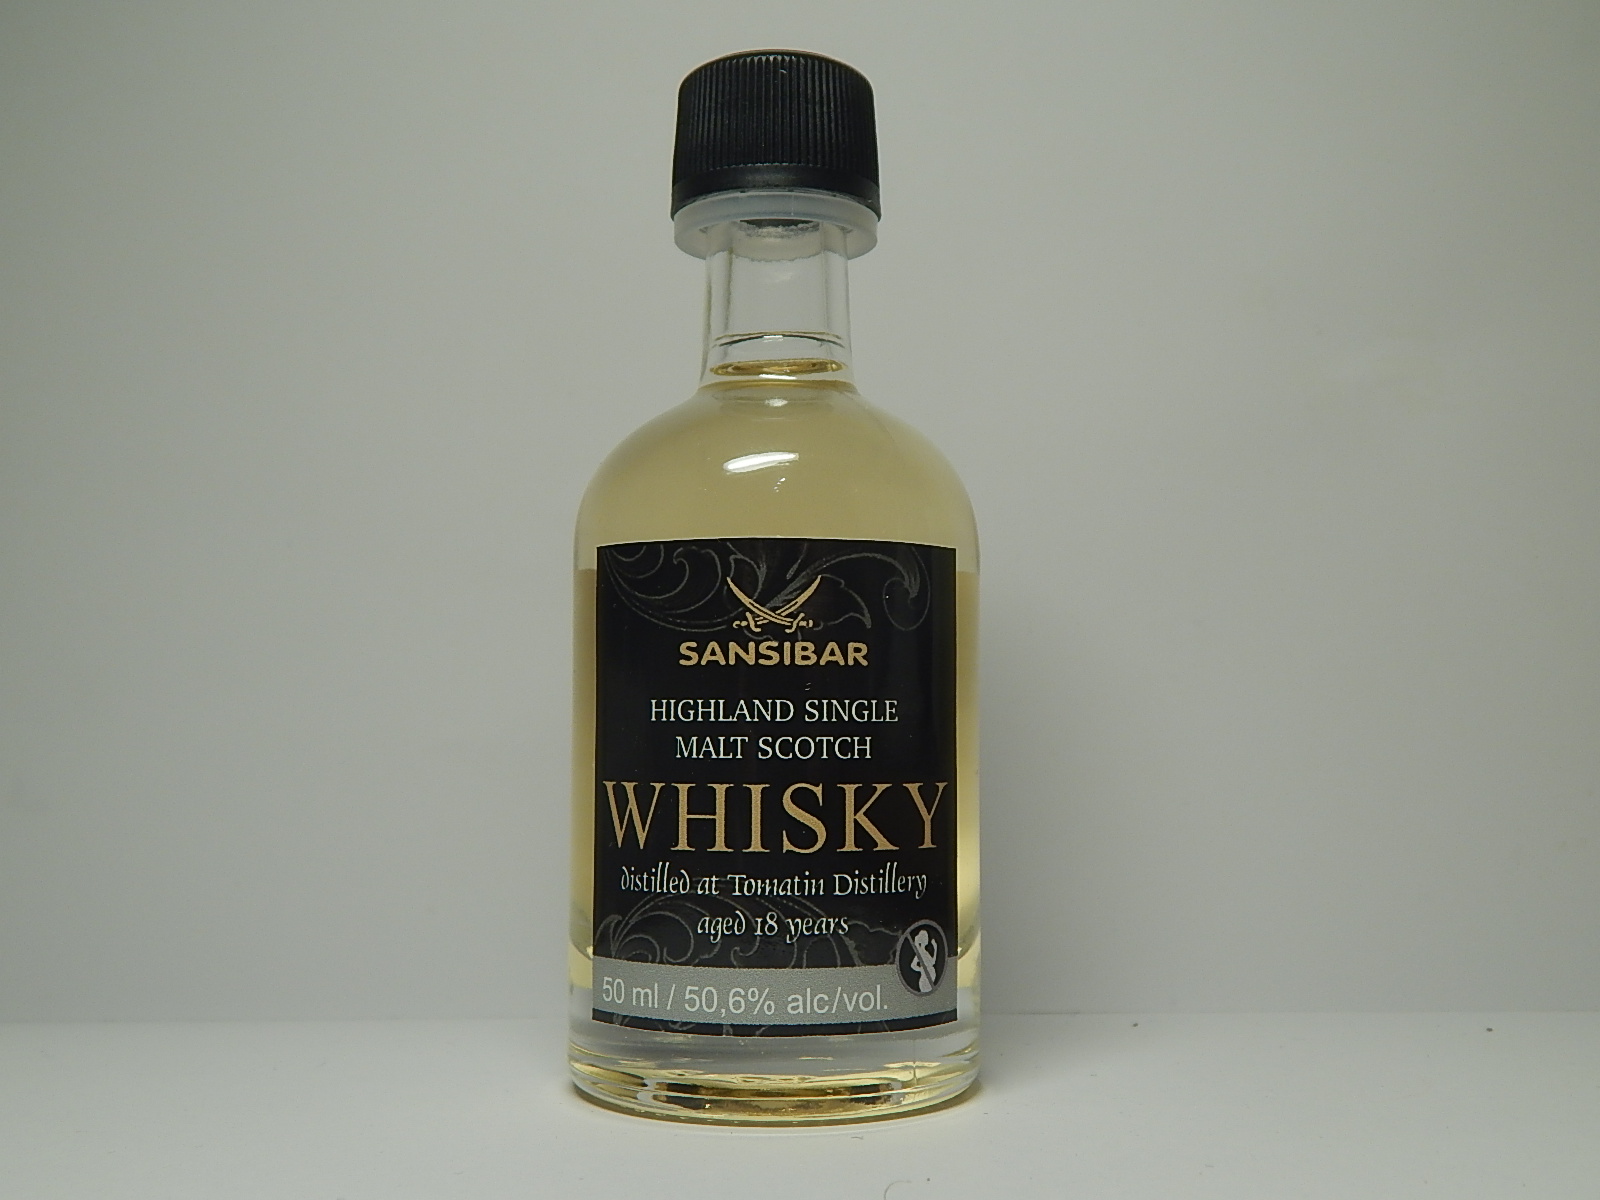 HSMSW 18yo "Sansibar Whisky" 50ml 50,6%alc/vol.